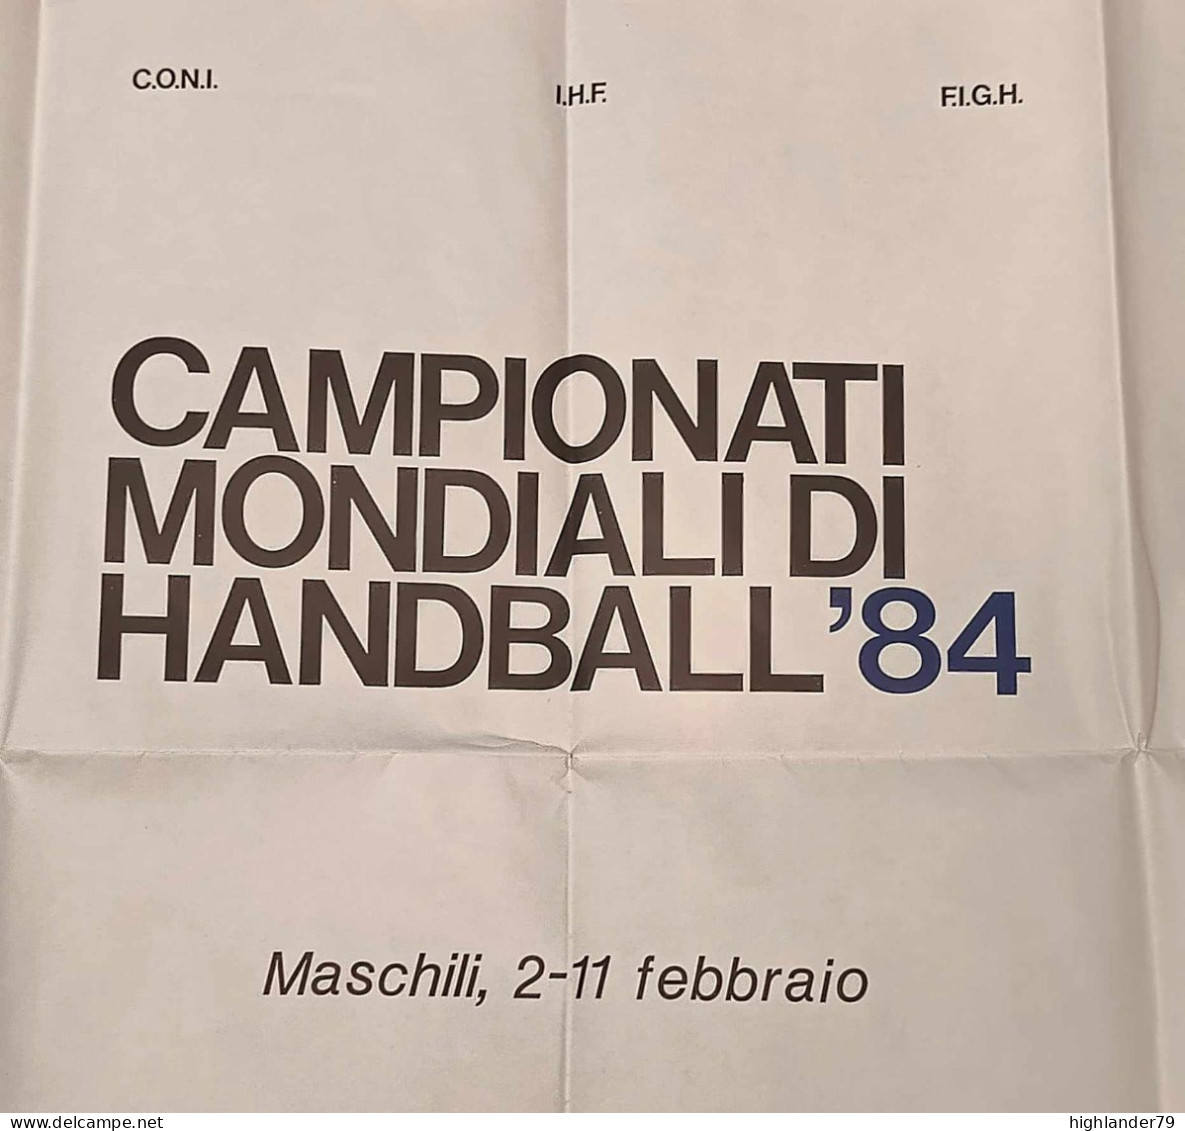 Handball World Championships Italy 1984 Ciccio Poster - Handball